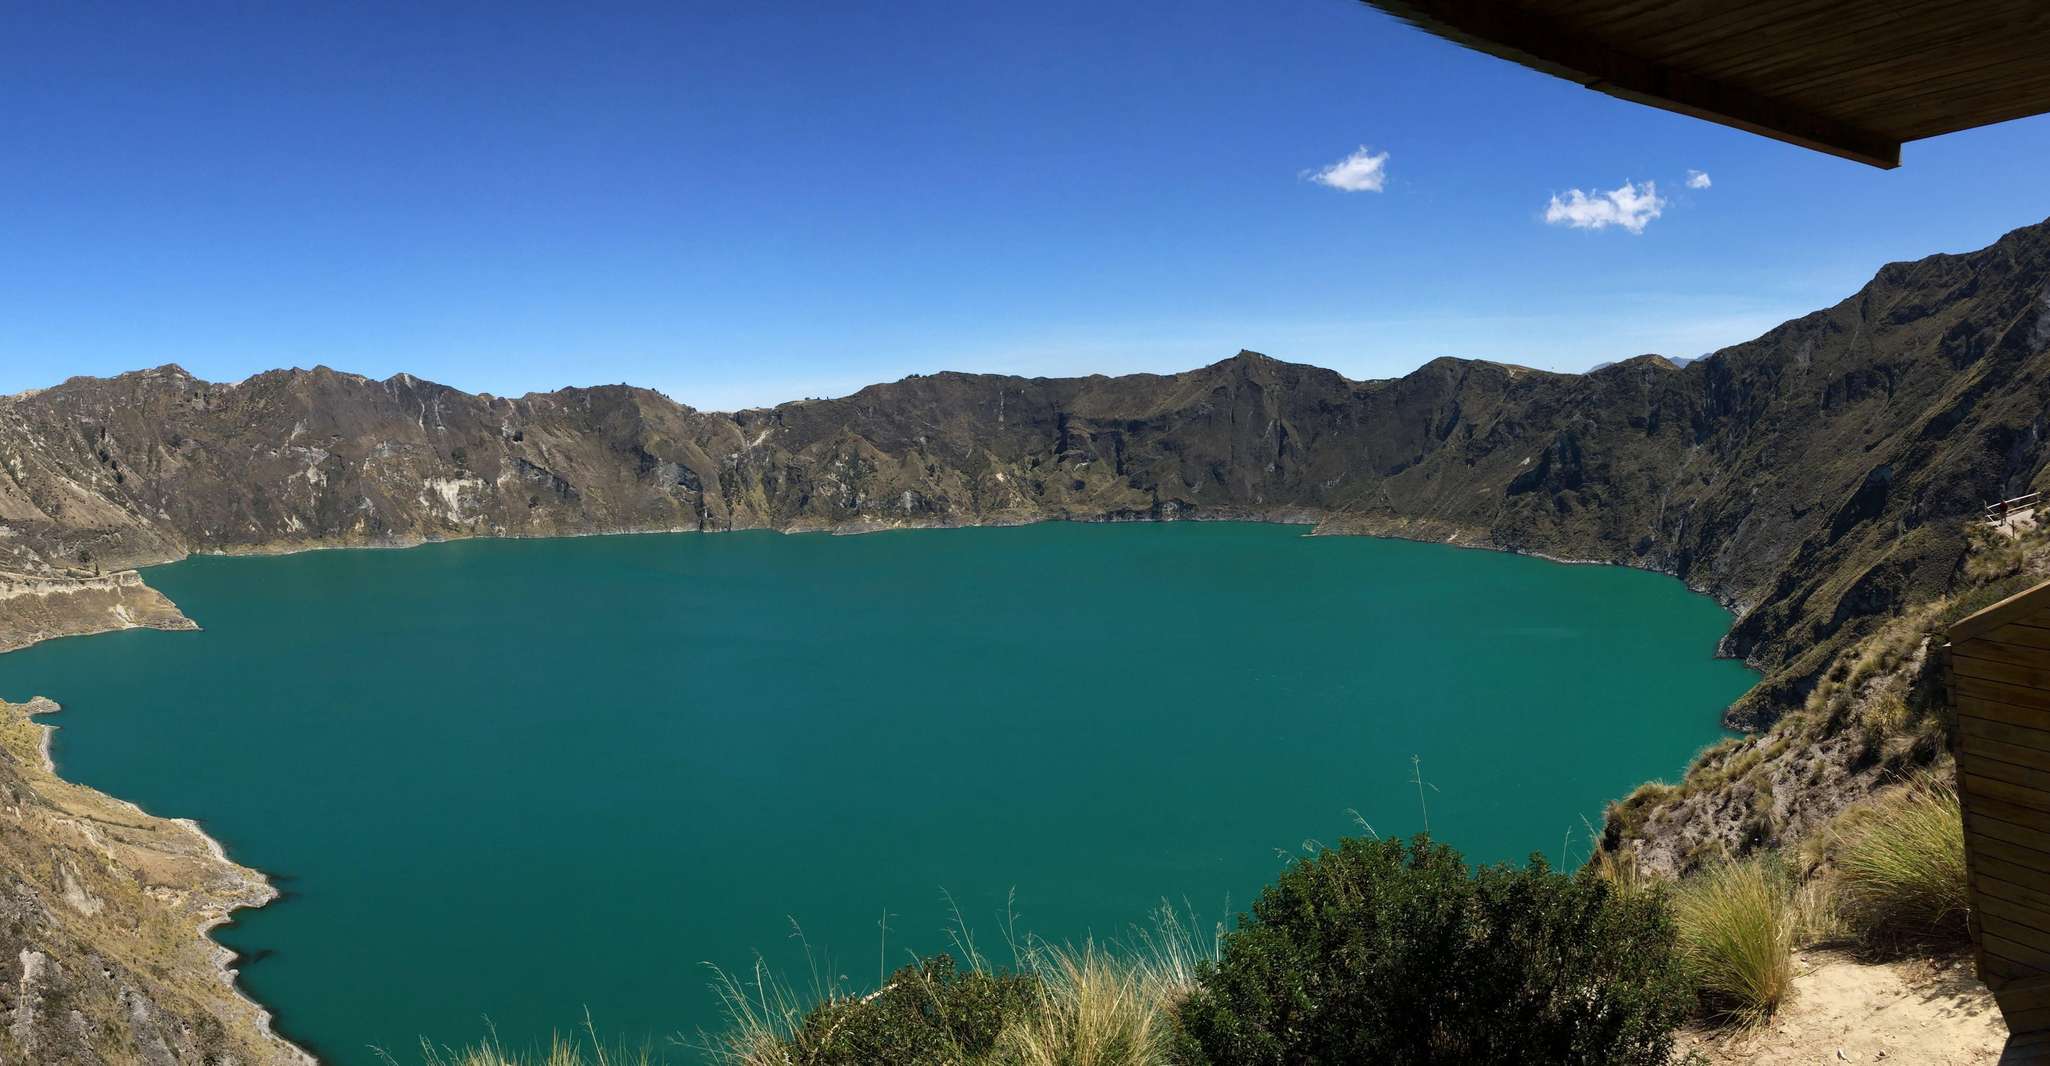 Día completo en Laguna Quilotoa, naturaleza y cultura andina